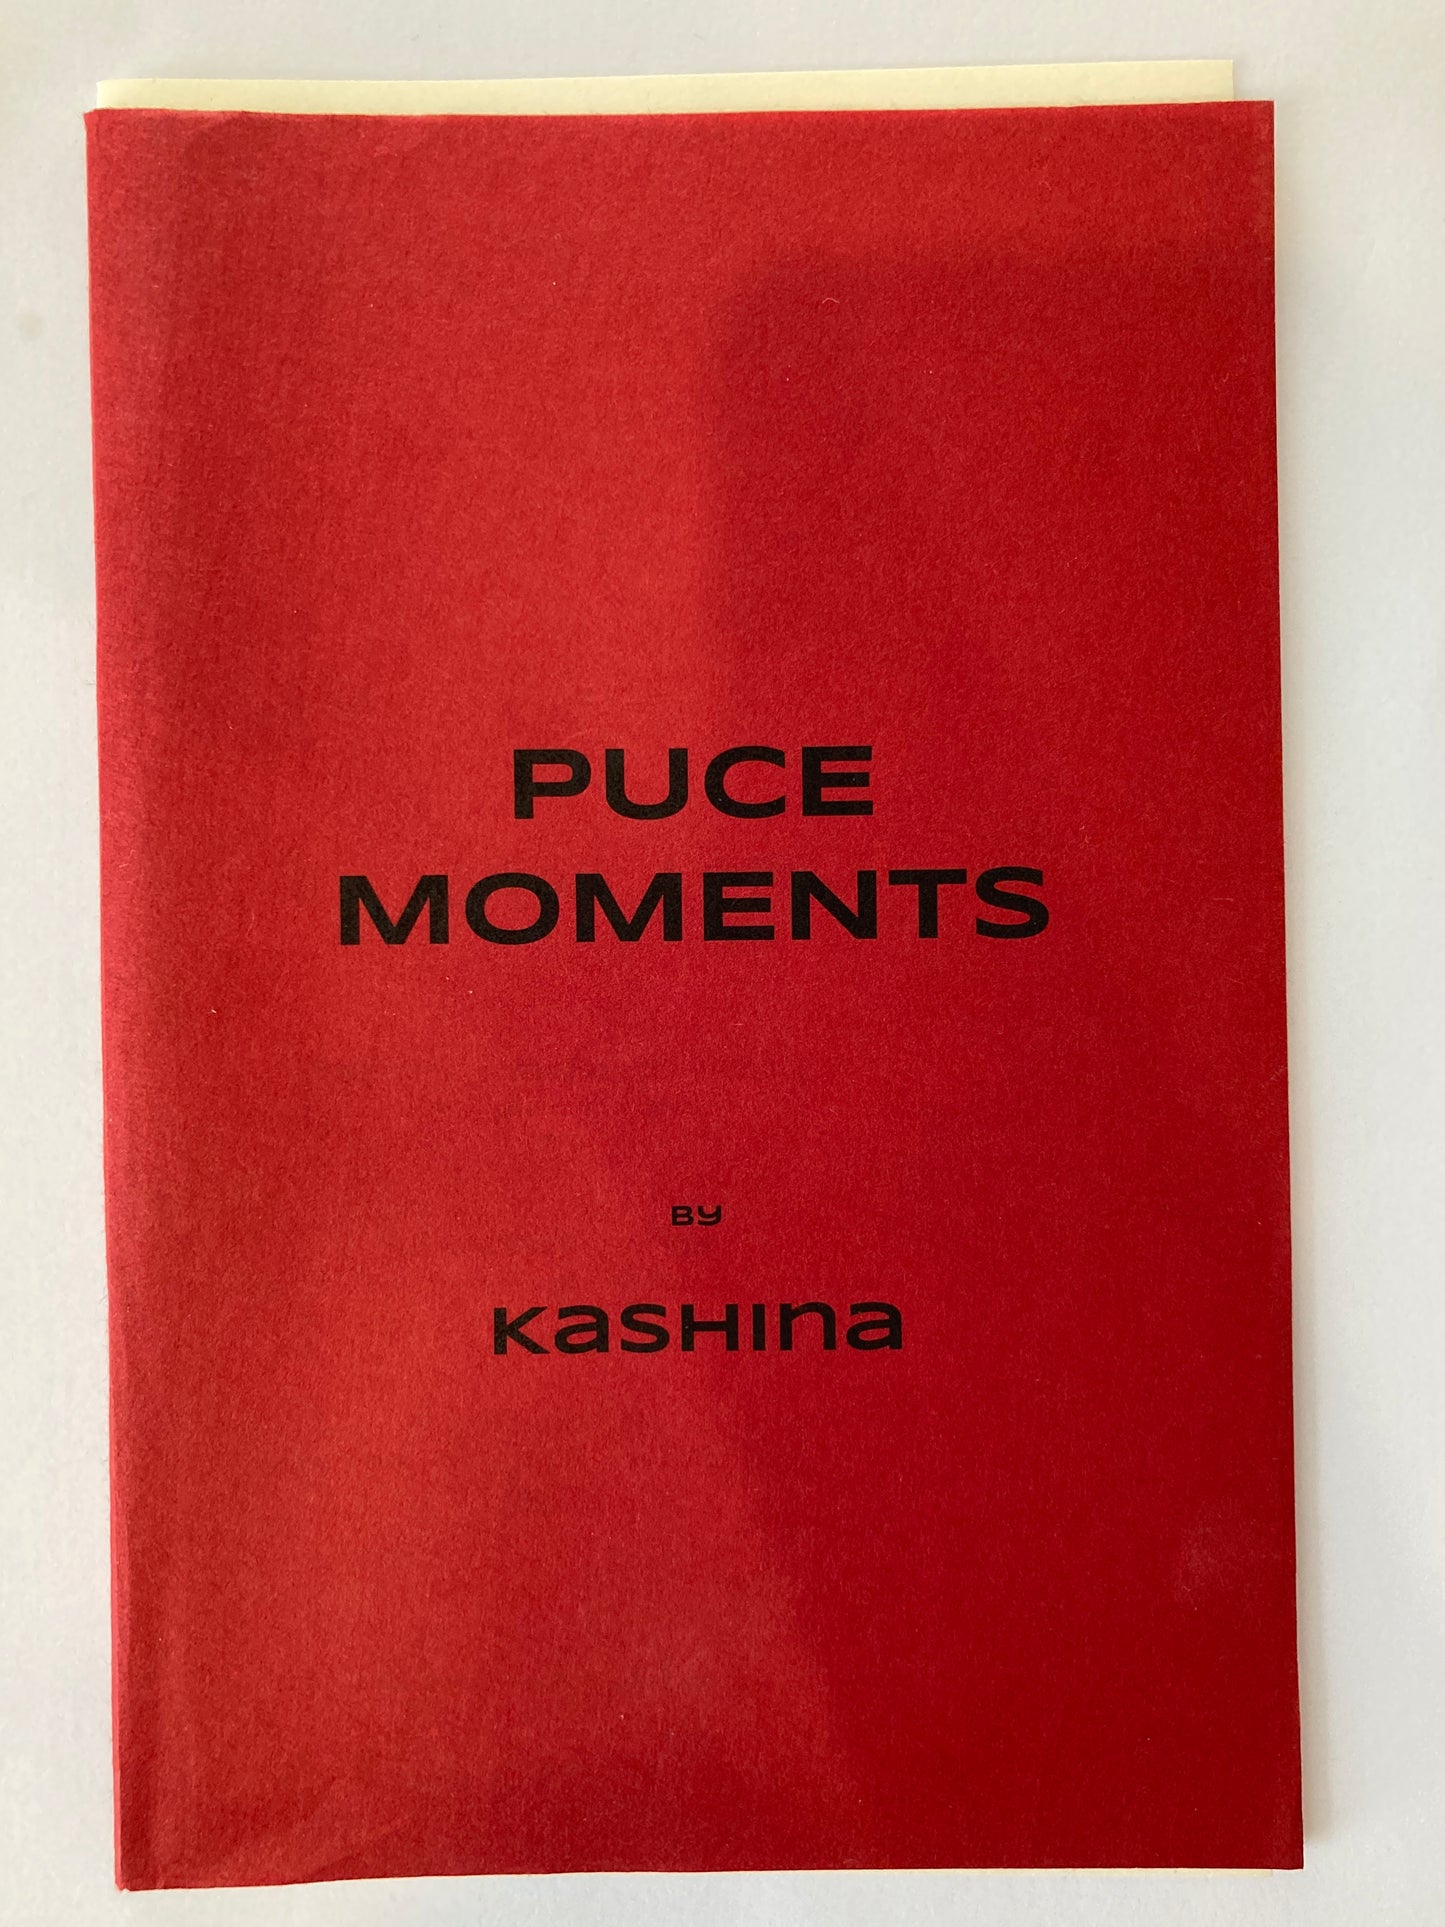 Puce Moments by Kashina